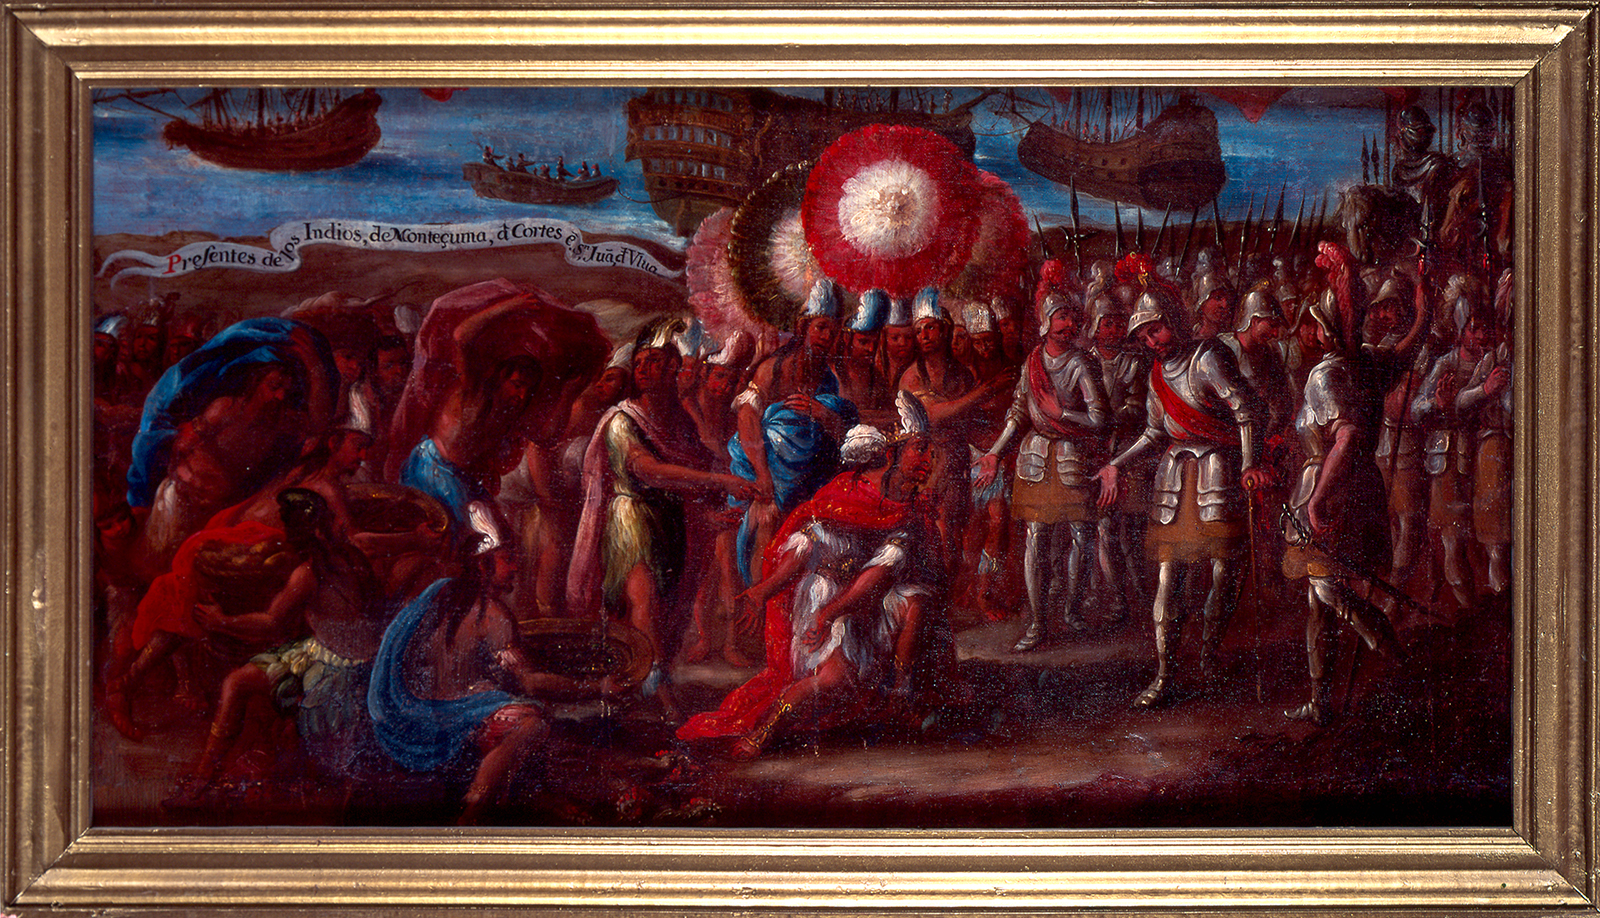 Presentes de los indios de Moctezuma a Hernán Cortés en San Juan de Ulúa